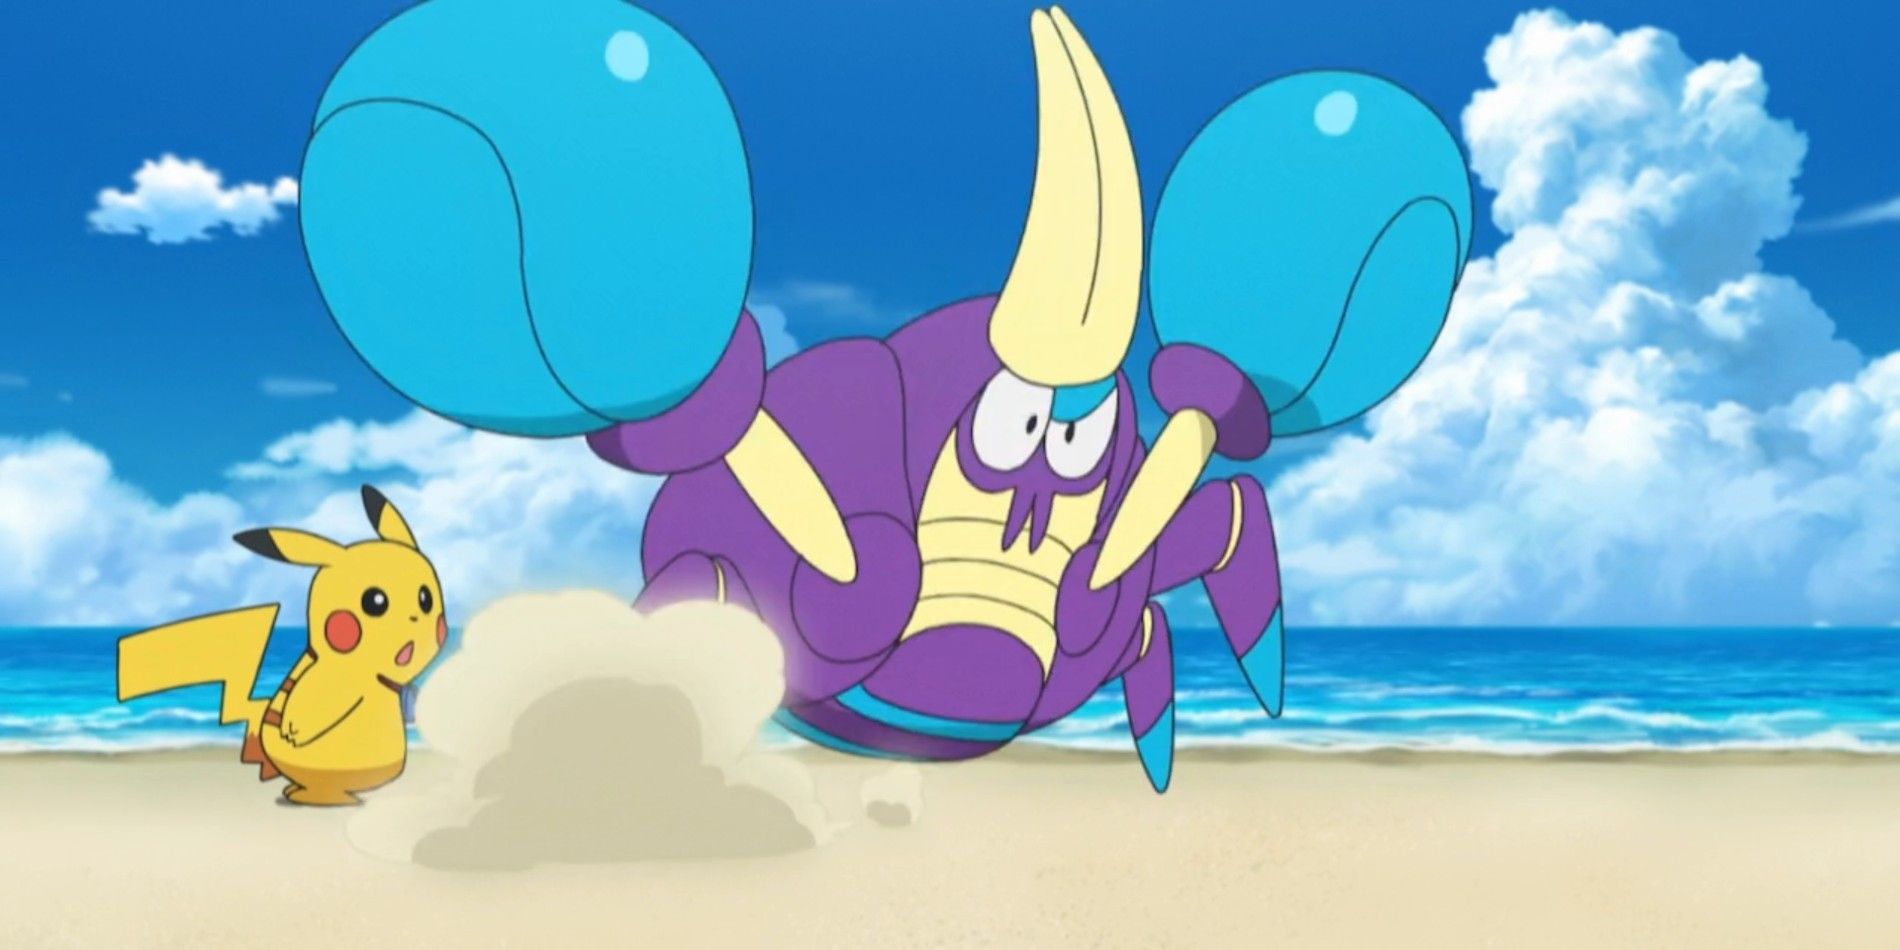 Crabrawler and Pikachu on the beach in the Pokémon anime